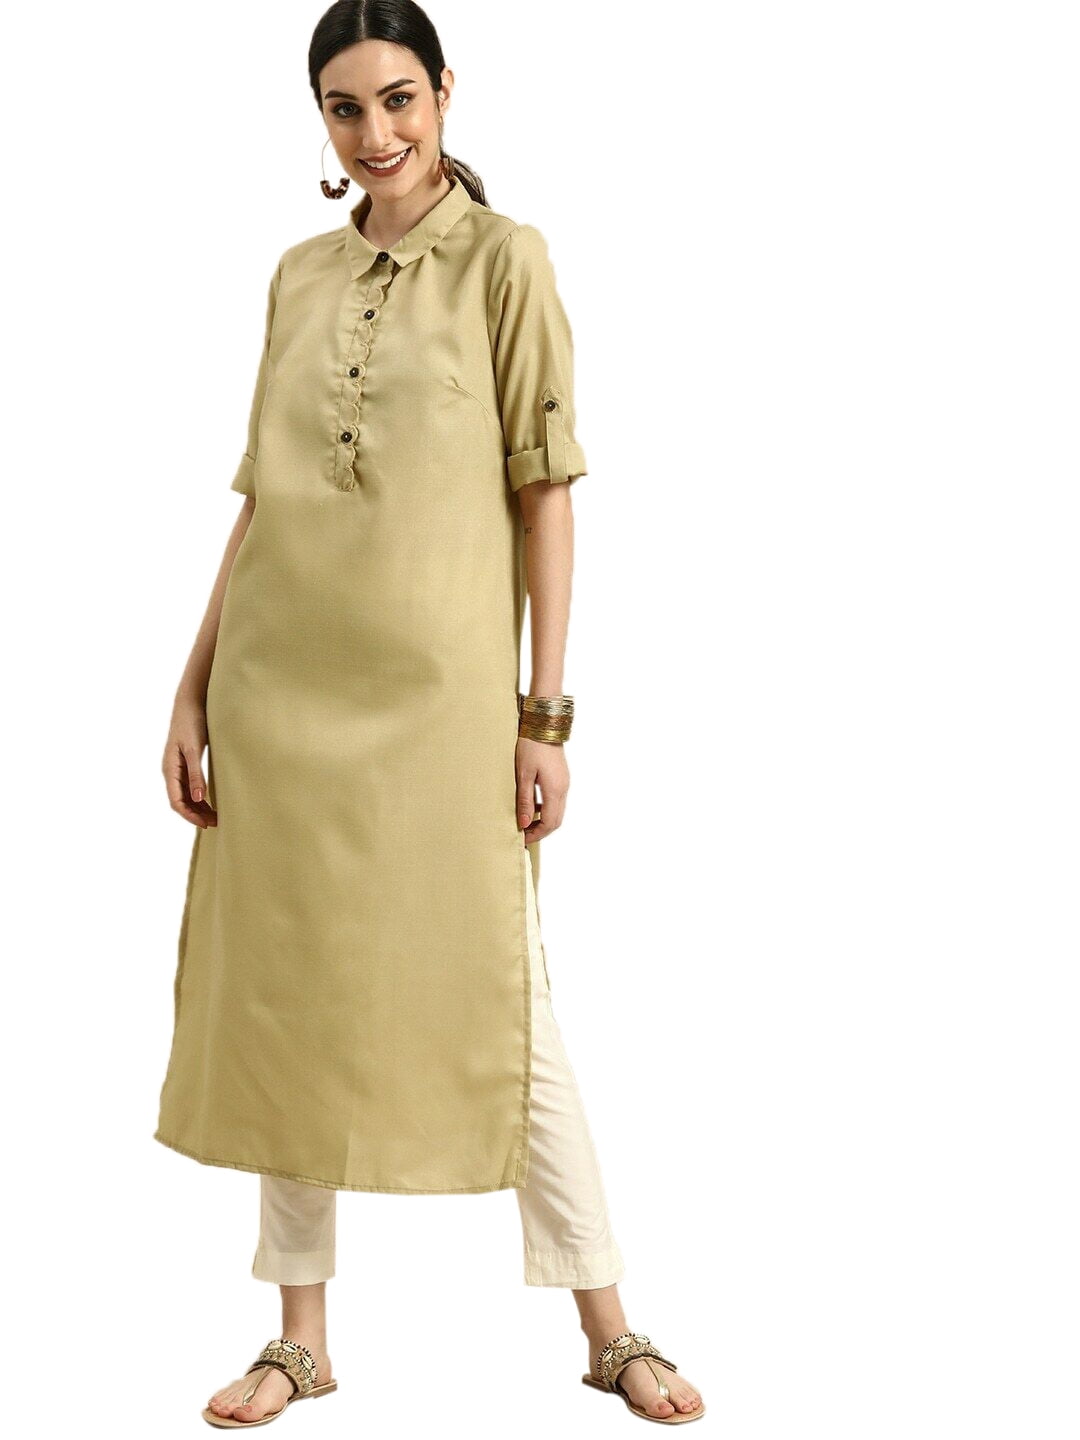 eloria Women's Fashion Collar Neck Design Indian Stylish Solid ...